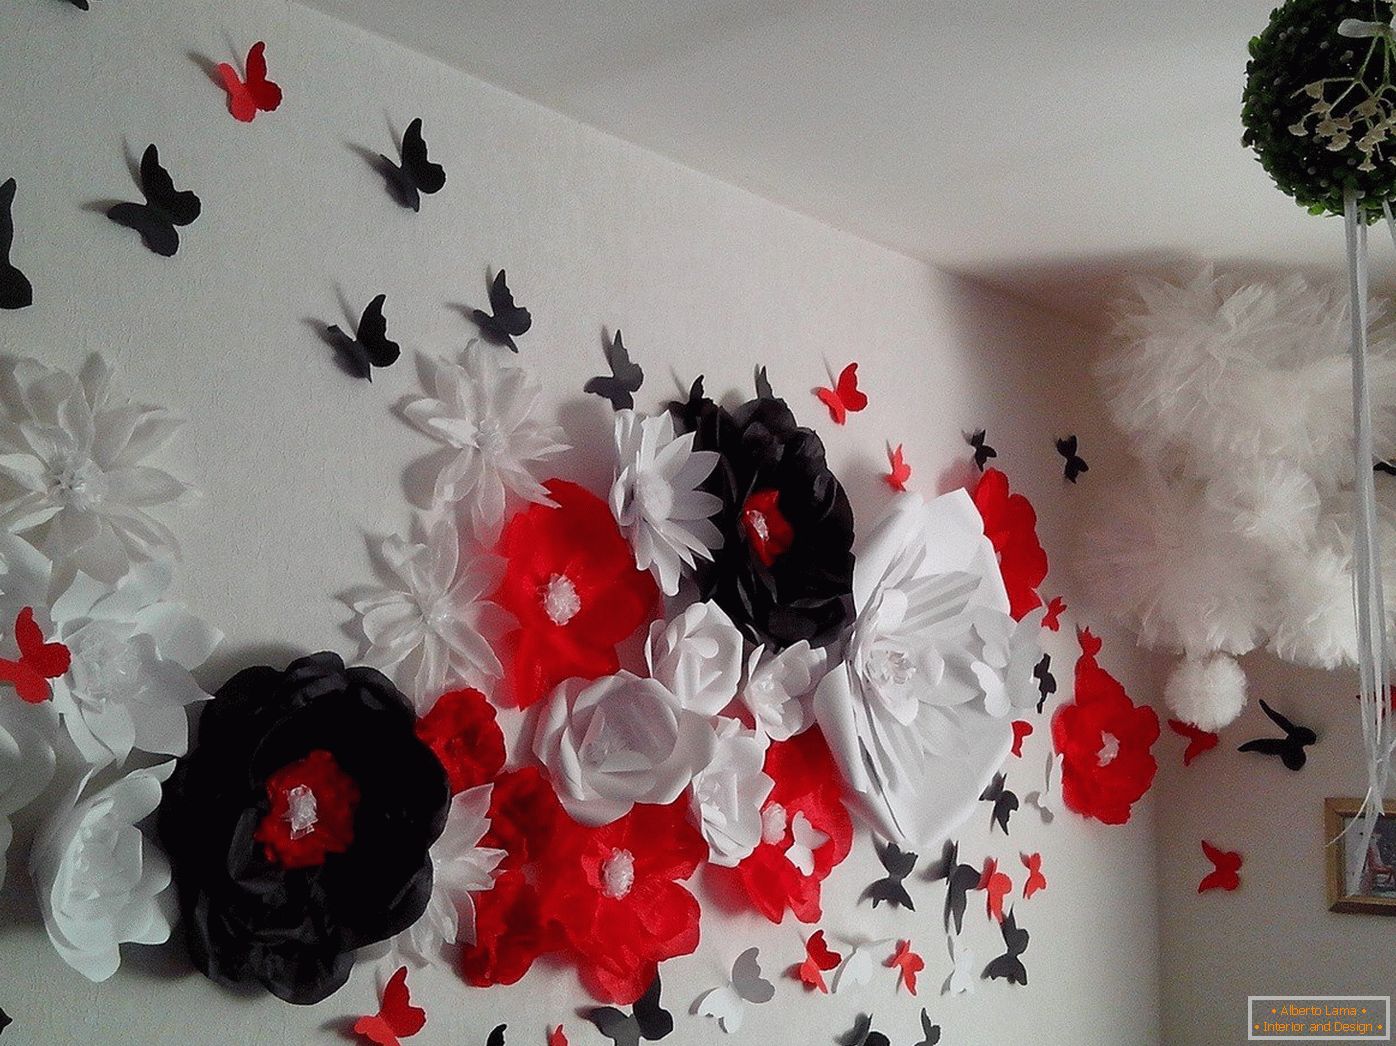 Cveće i leptir na zidu